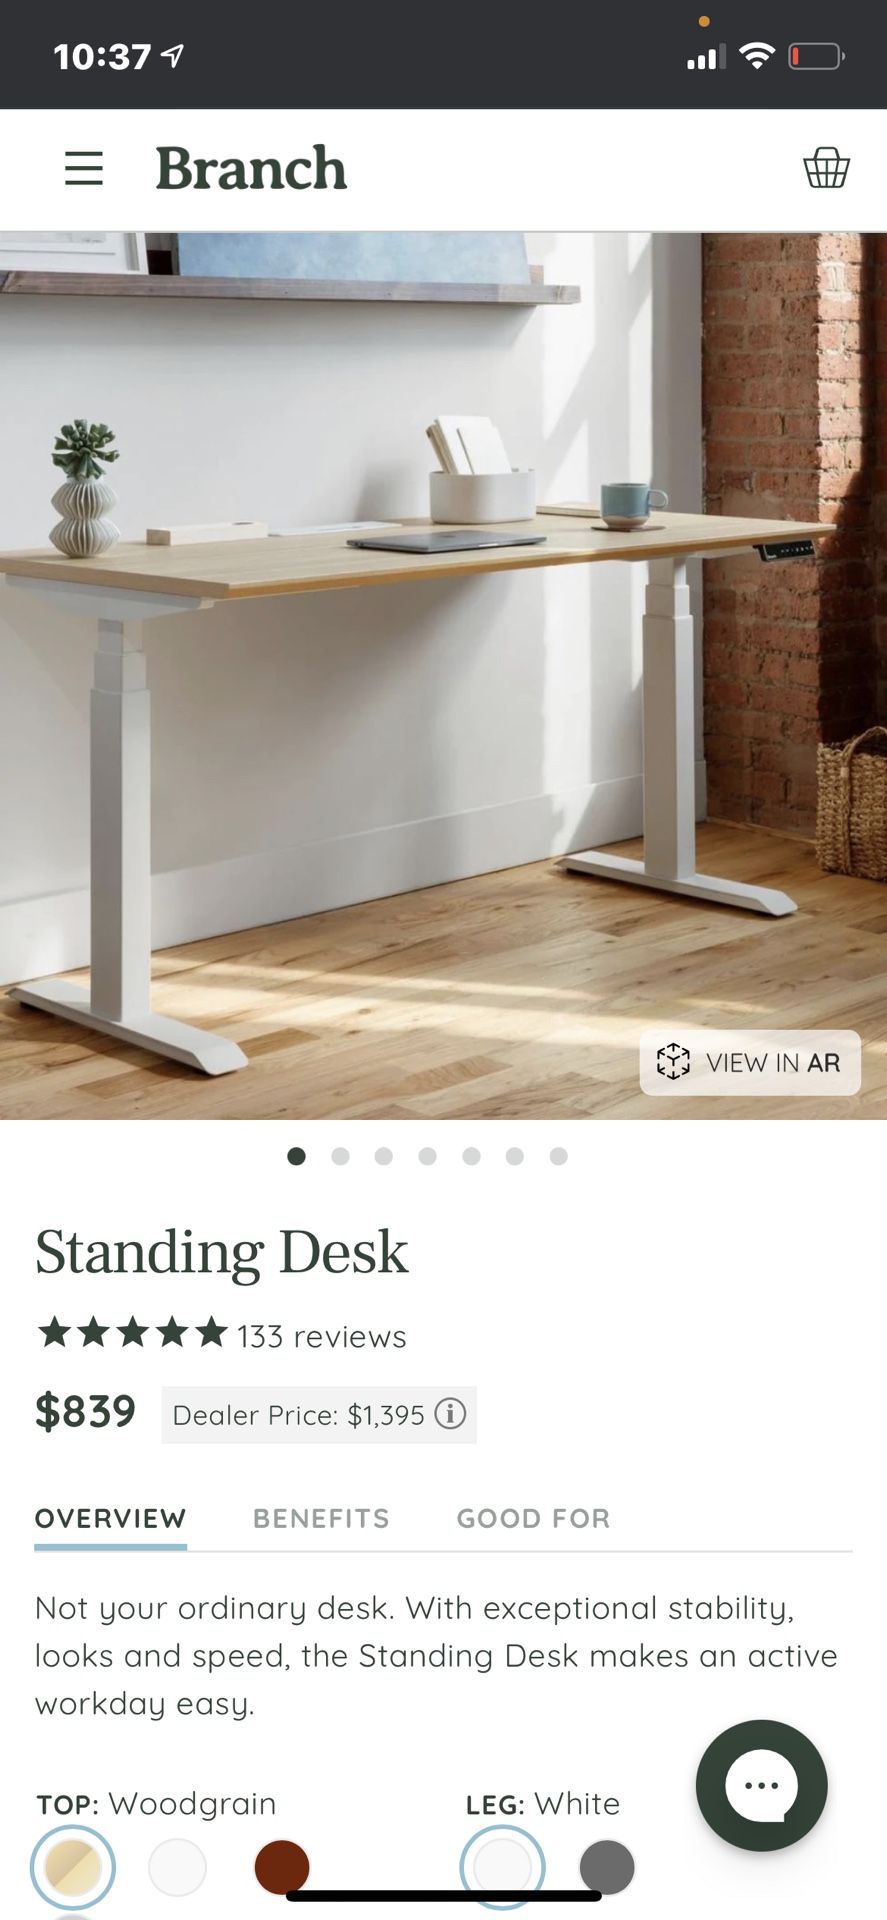 Branch Standing Desk/Elevate Chair